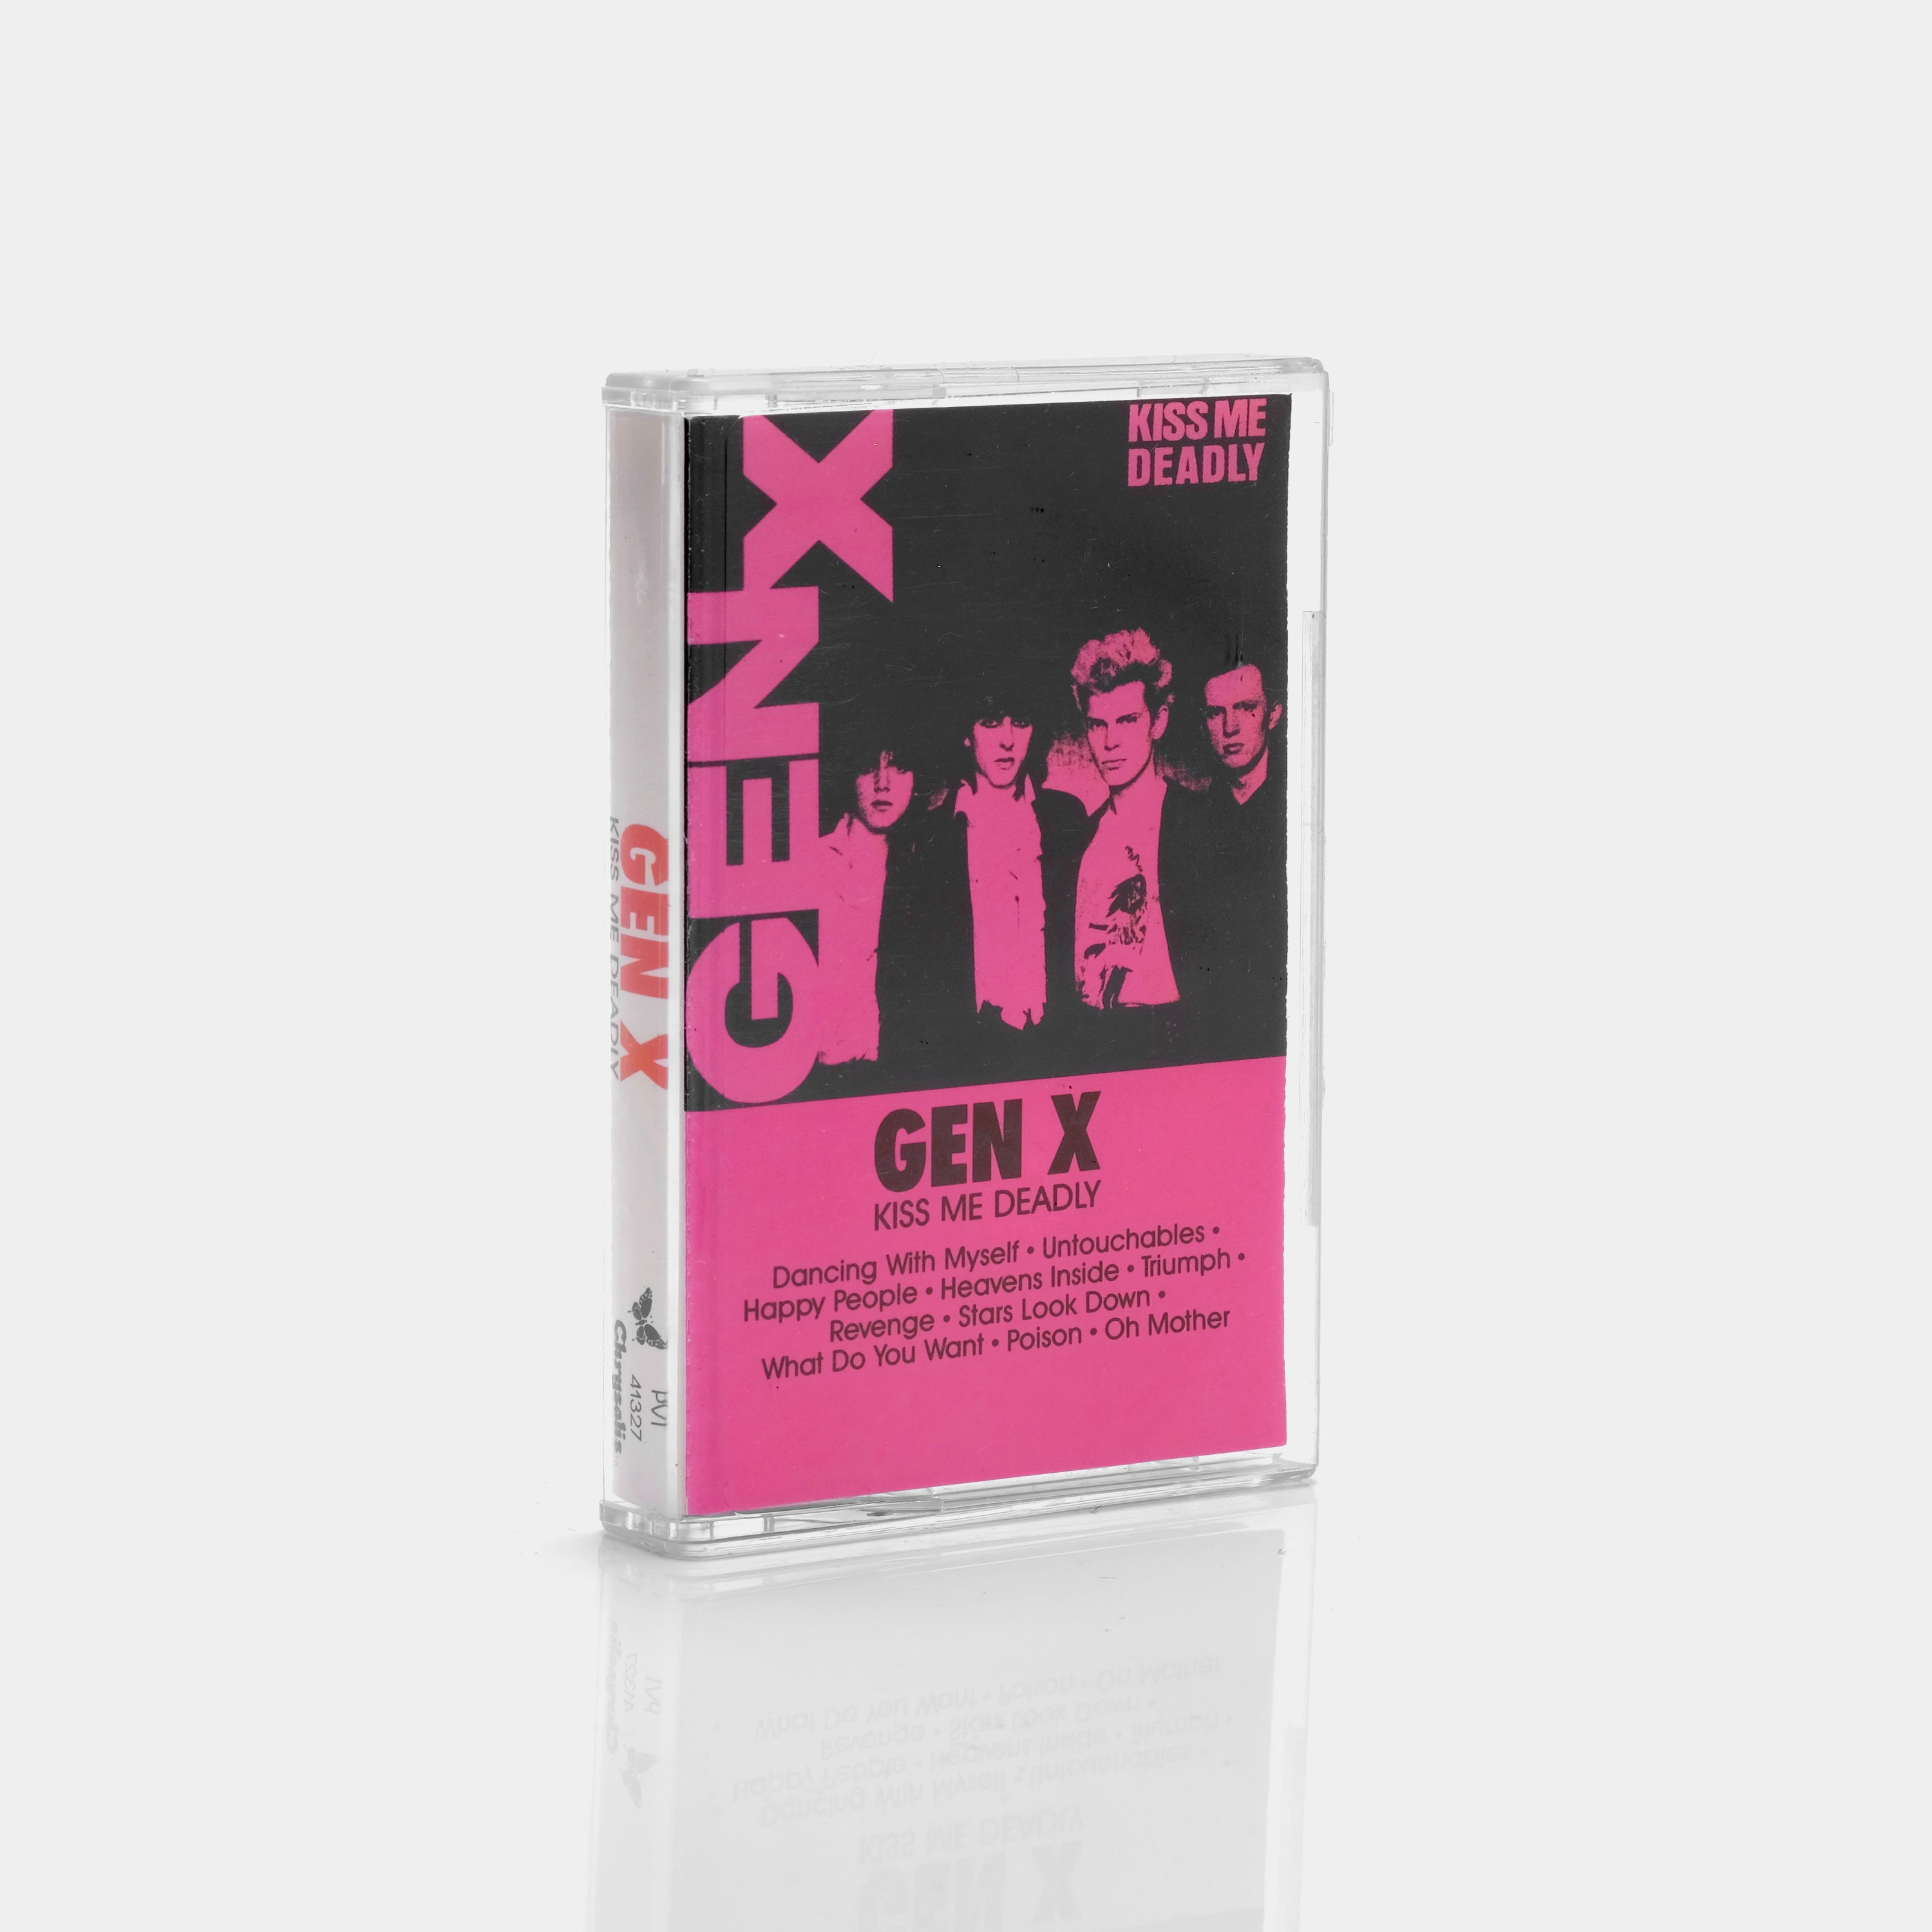 Gen X - Kiss Me Deadly Cassette Tape